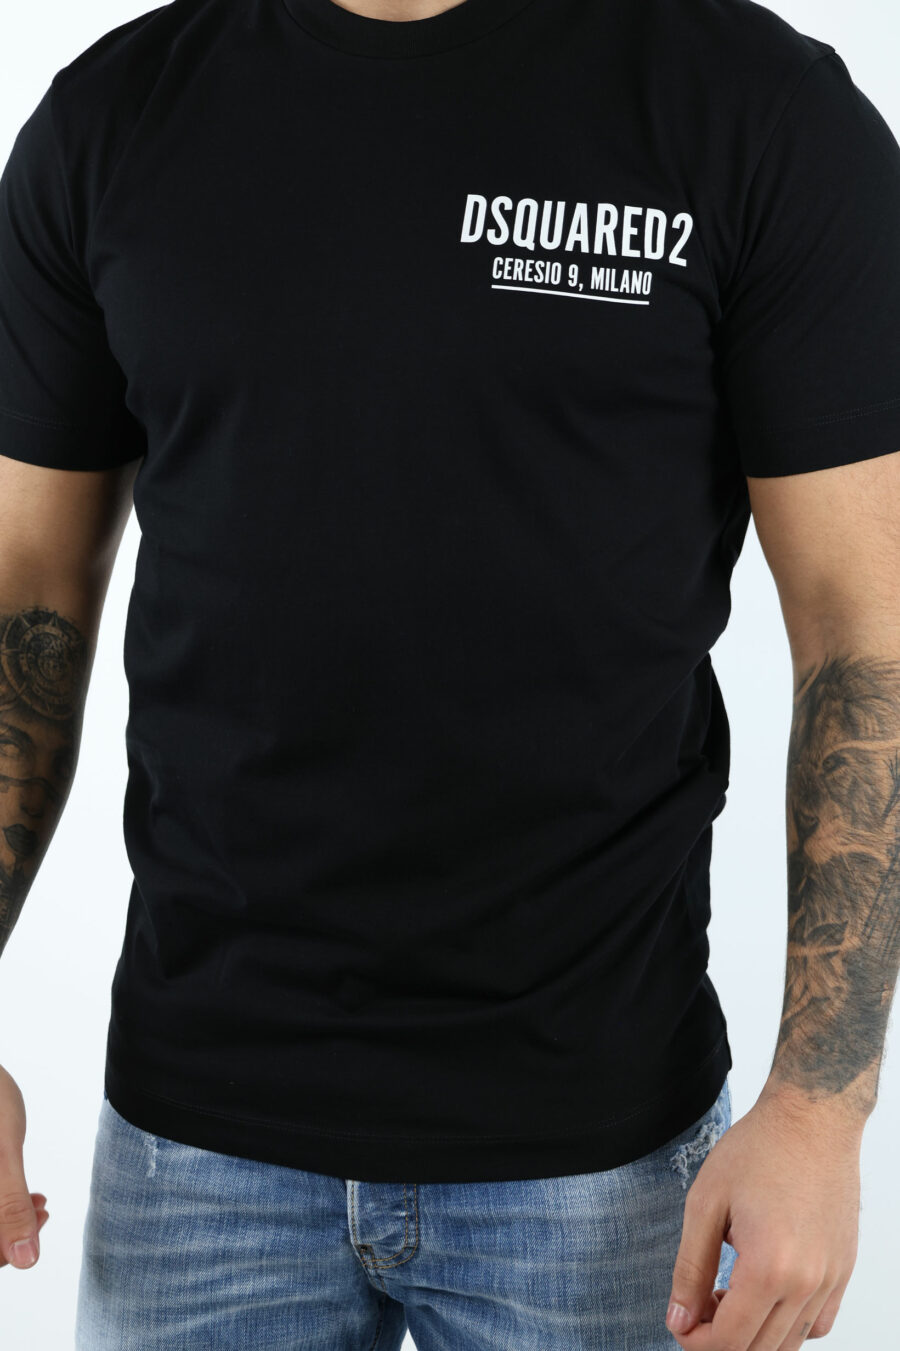 Camiseta negra con minilogo "ceresio 9, milano" - 106878